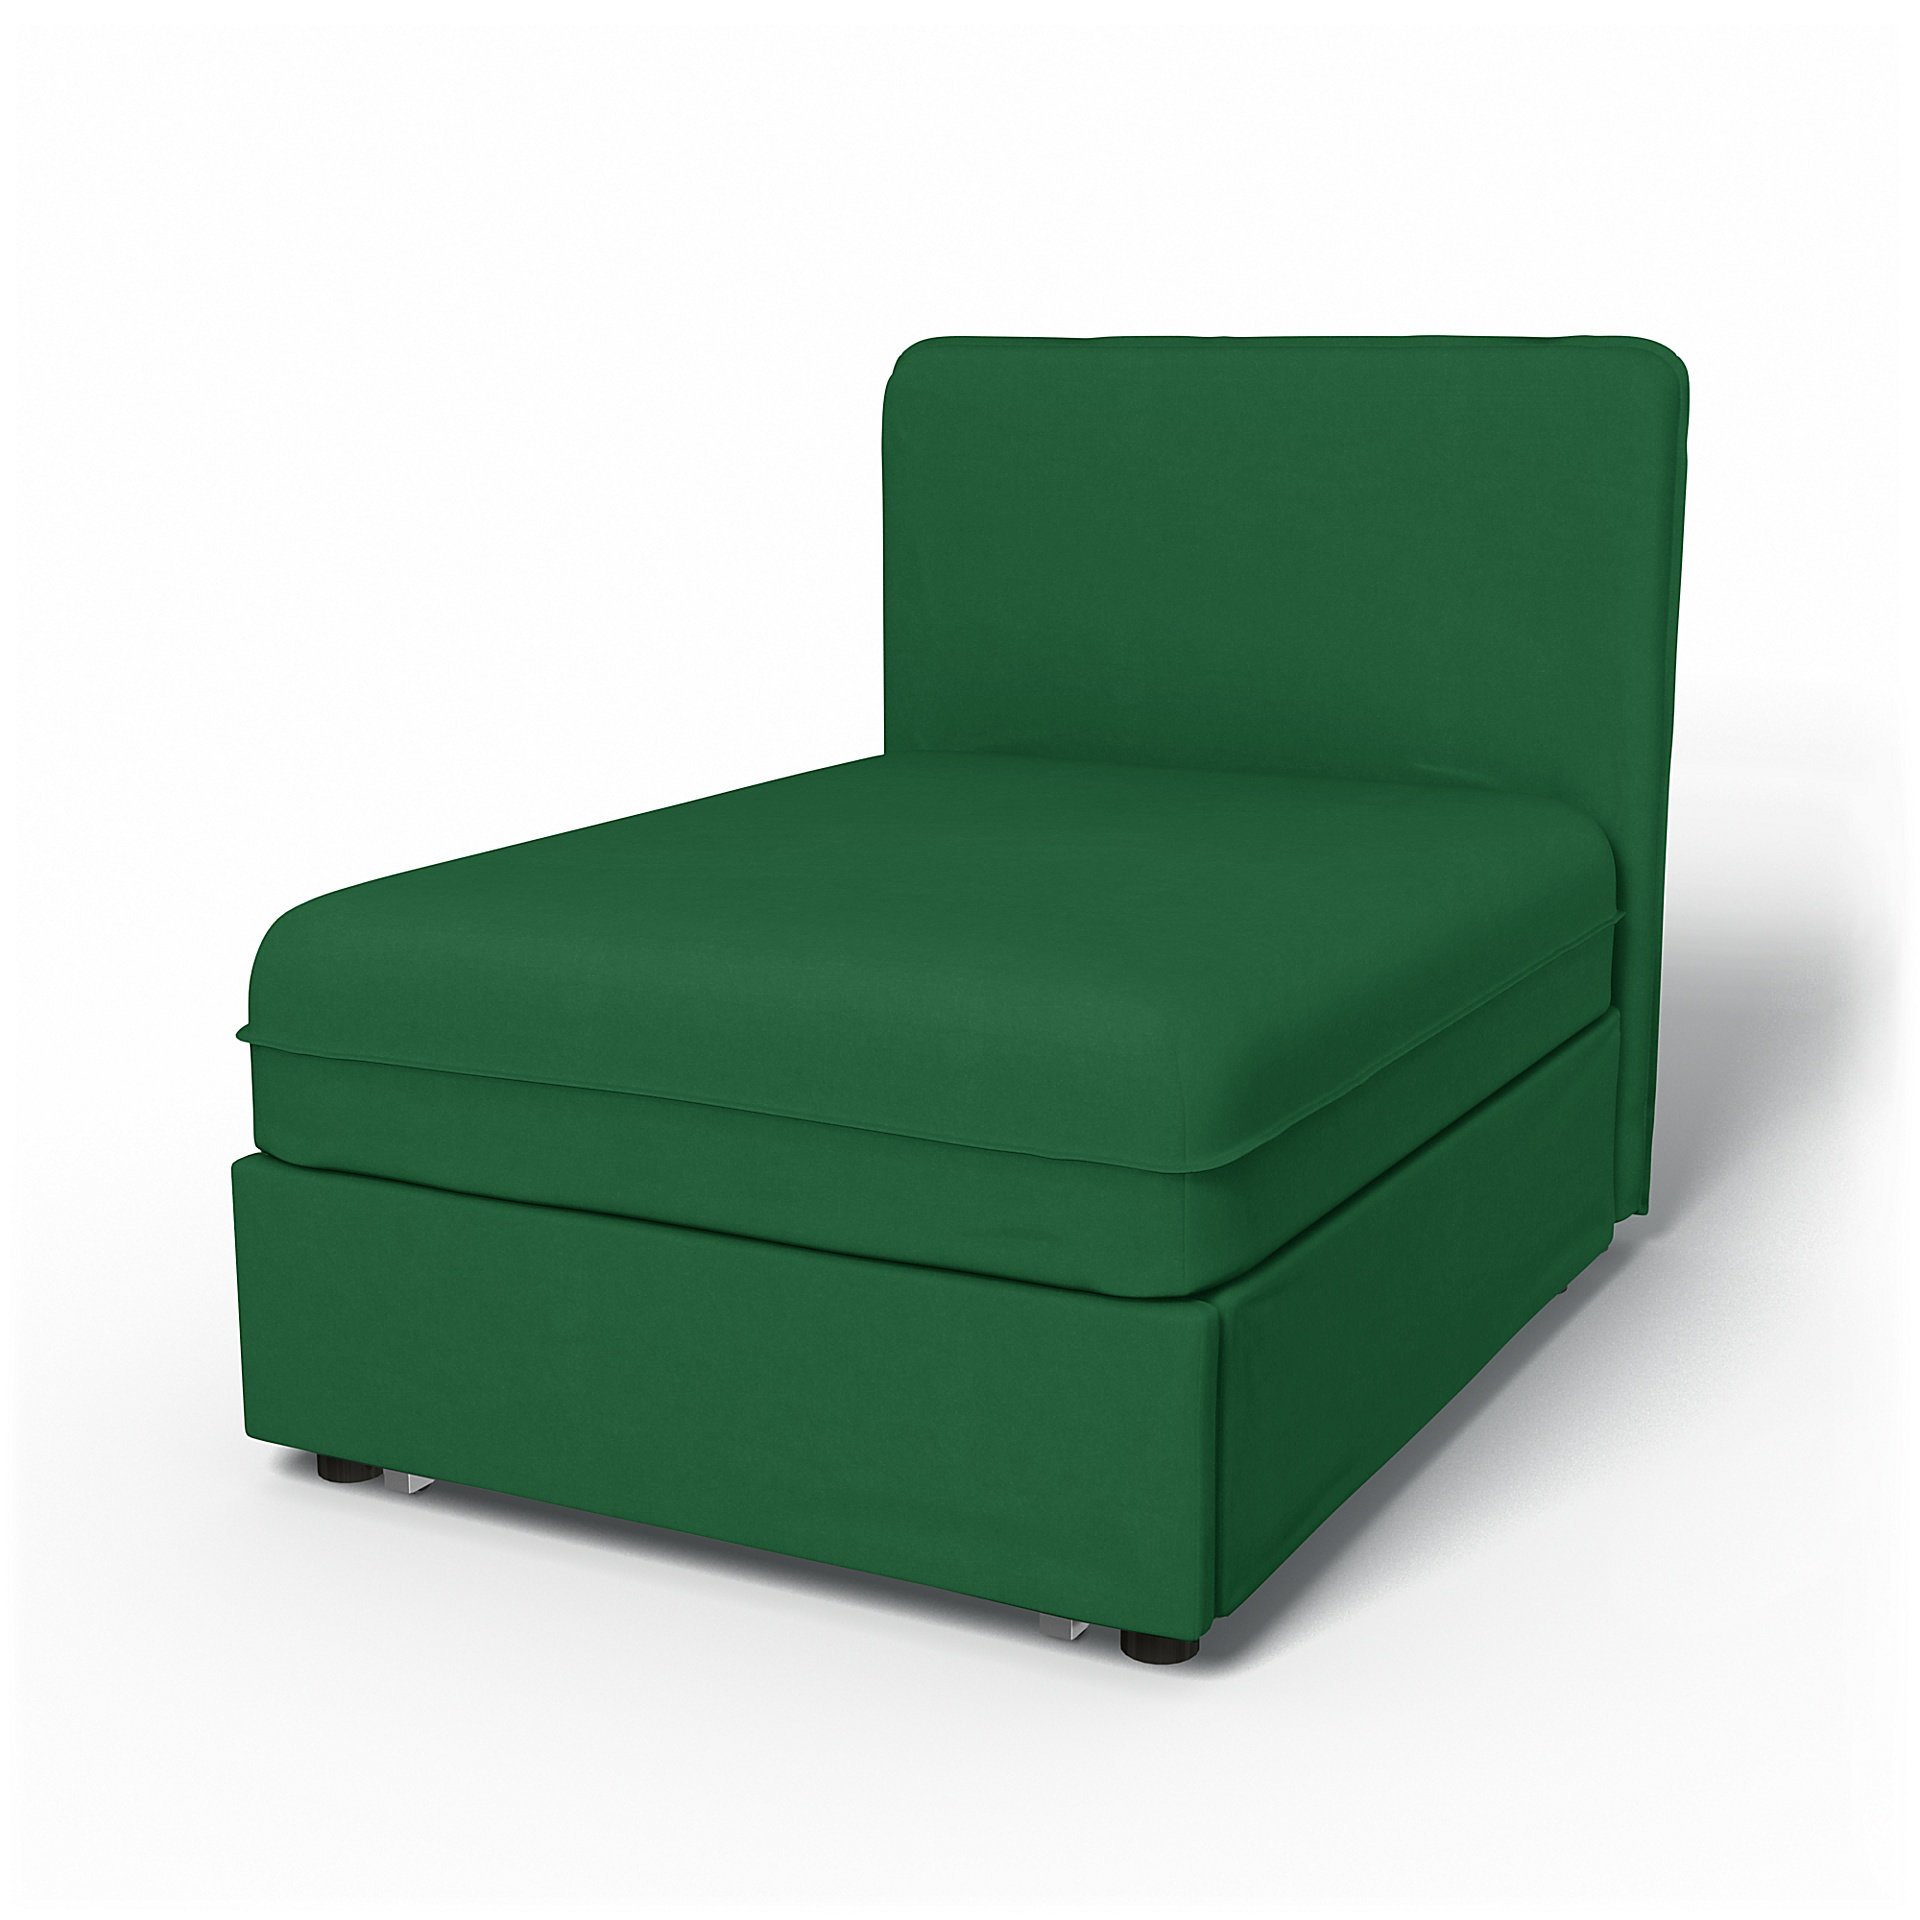 IKEA - Vallentuna Seat Module with Low Back Sofa Bed Cover 80x100 cm 32x39in, Abundant Green, Velvet